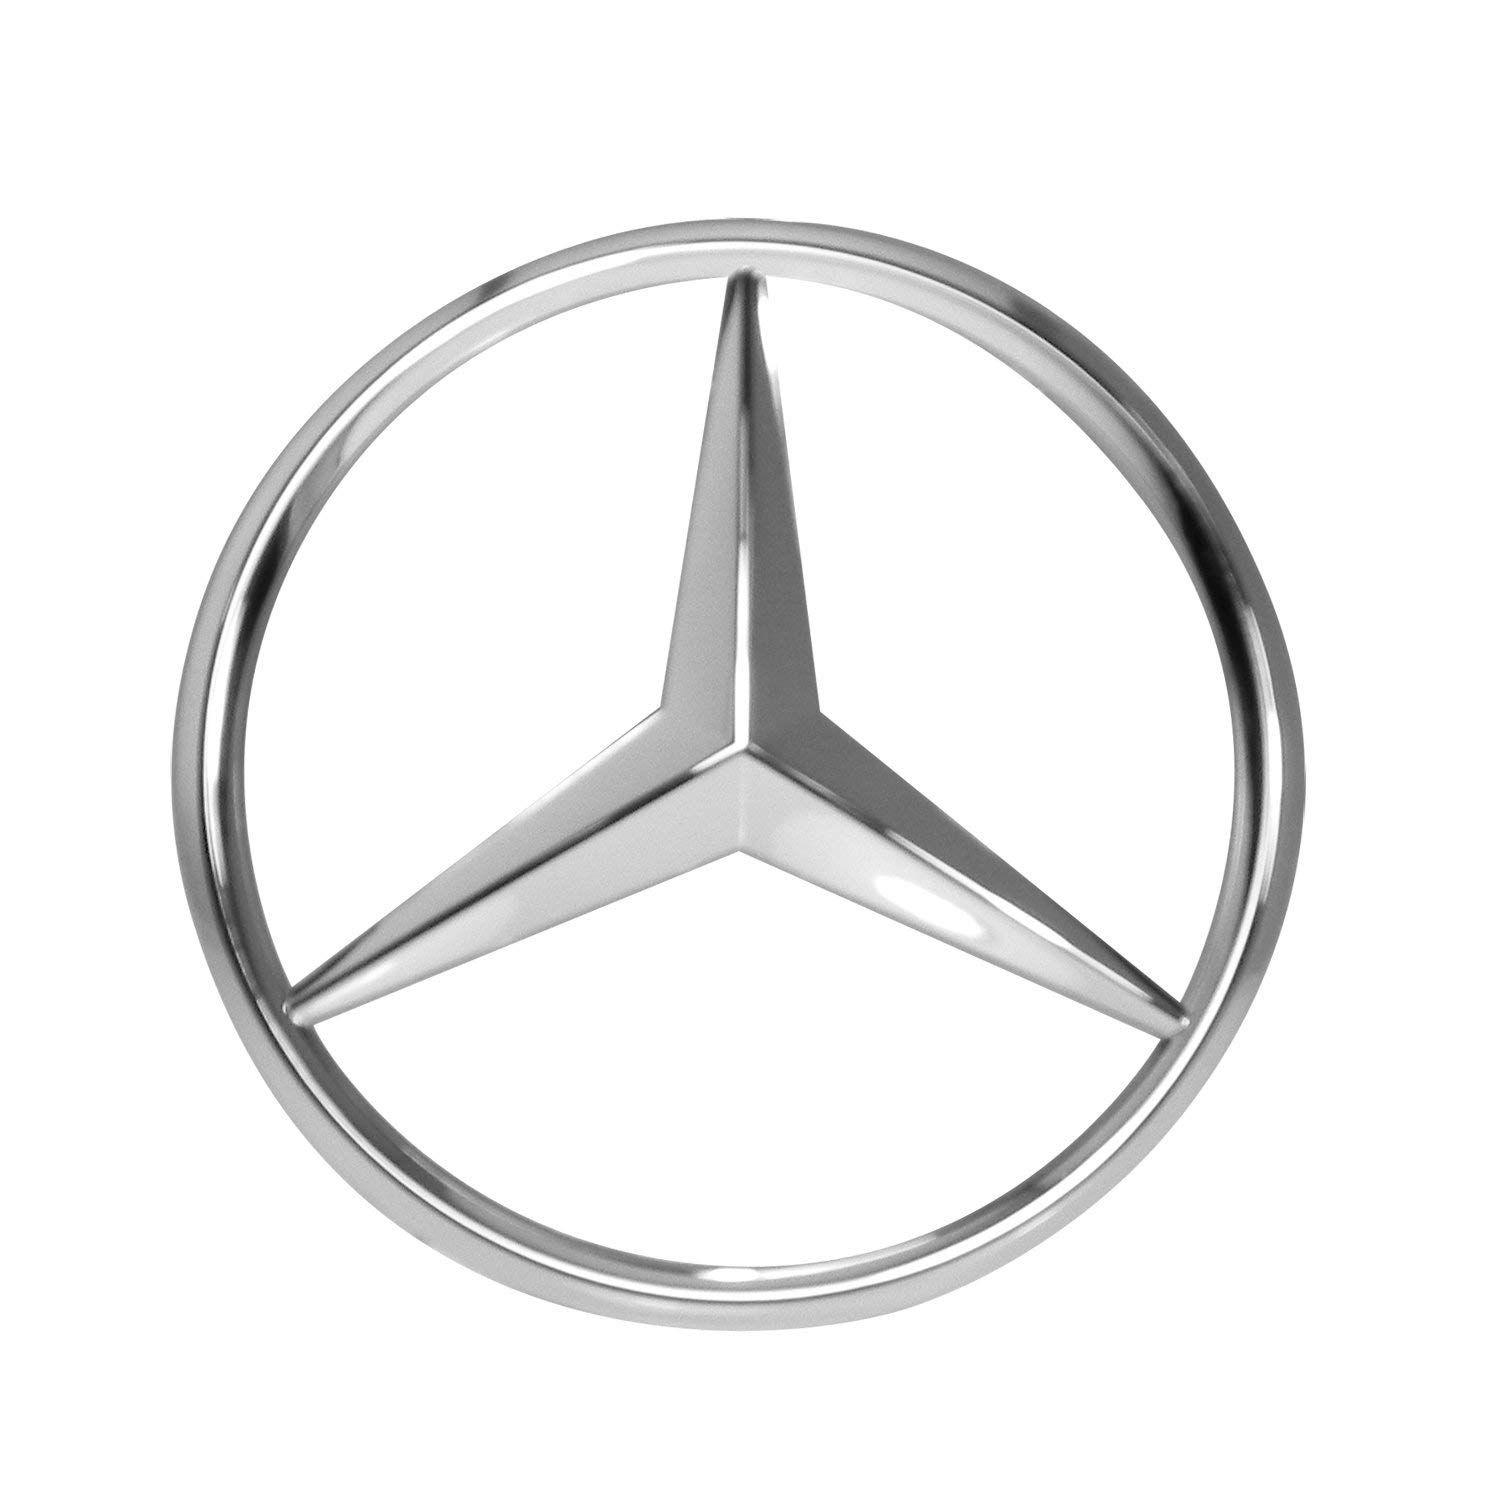 C Symbol Logo - Amazon.com: Mercedes-Benz Chrome Front Grill Star Emblem for C-Class ...